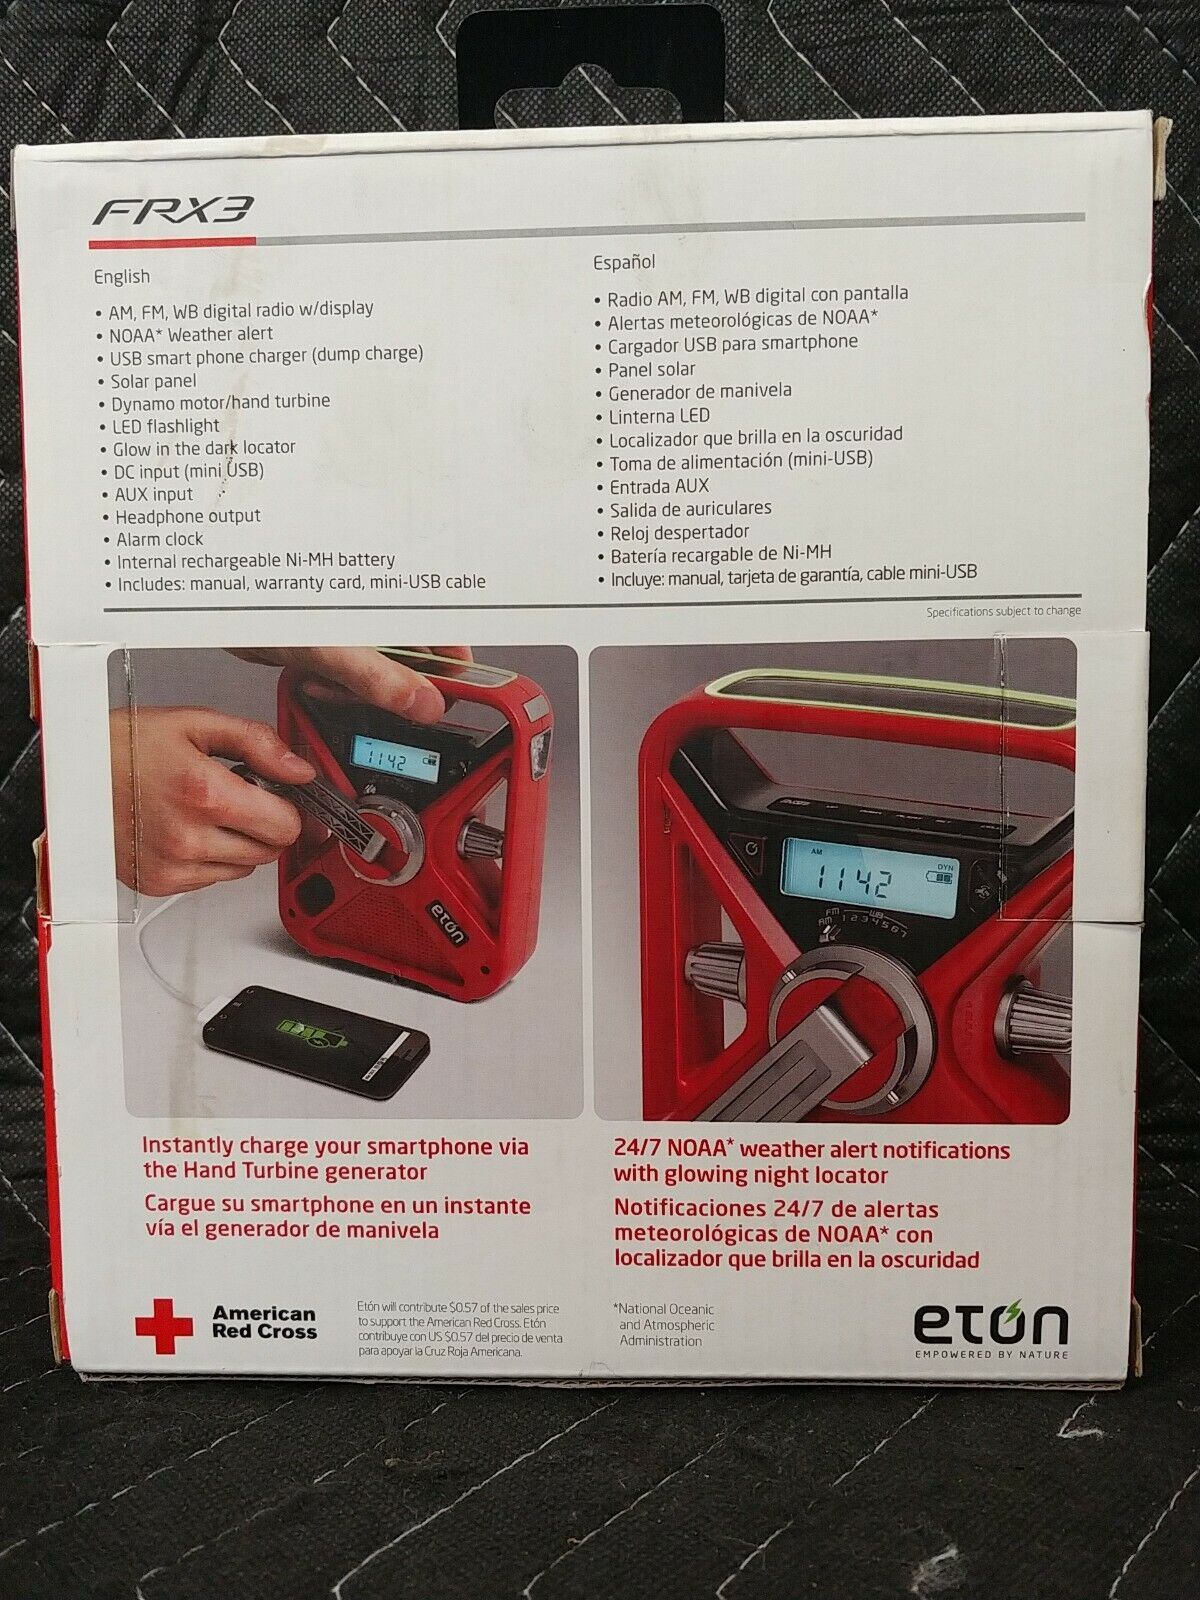 ETON FRX3 Hand Turbine AM/FM Weather Alert Radio and Portable Phone Charger